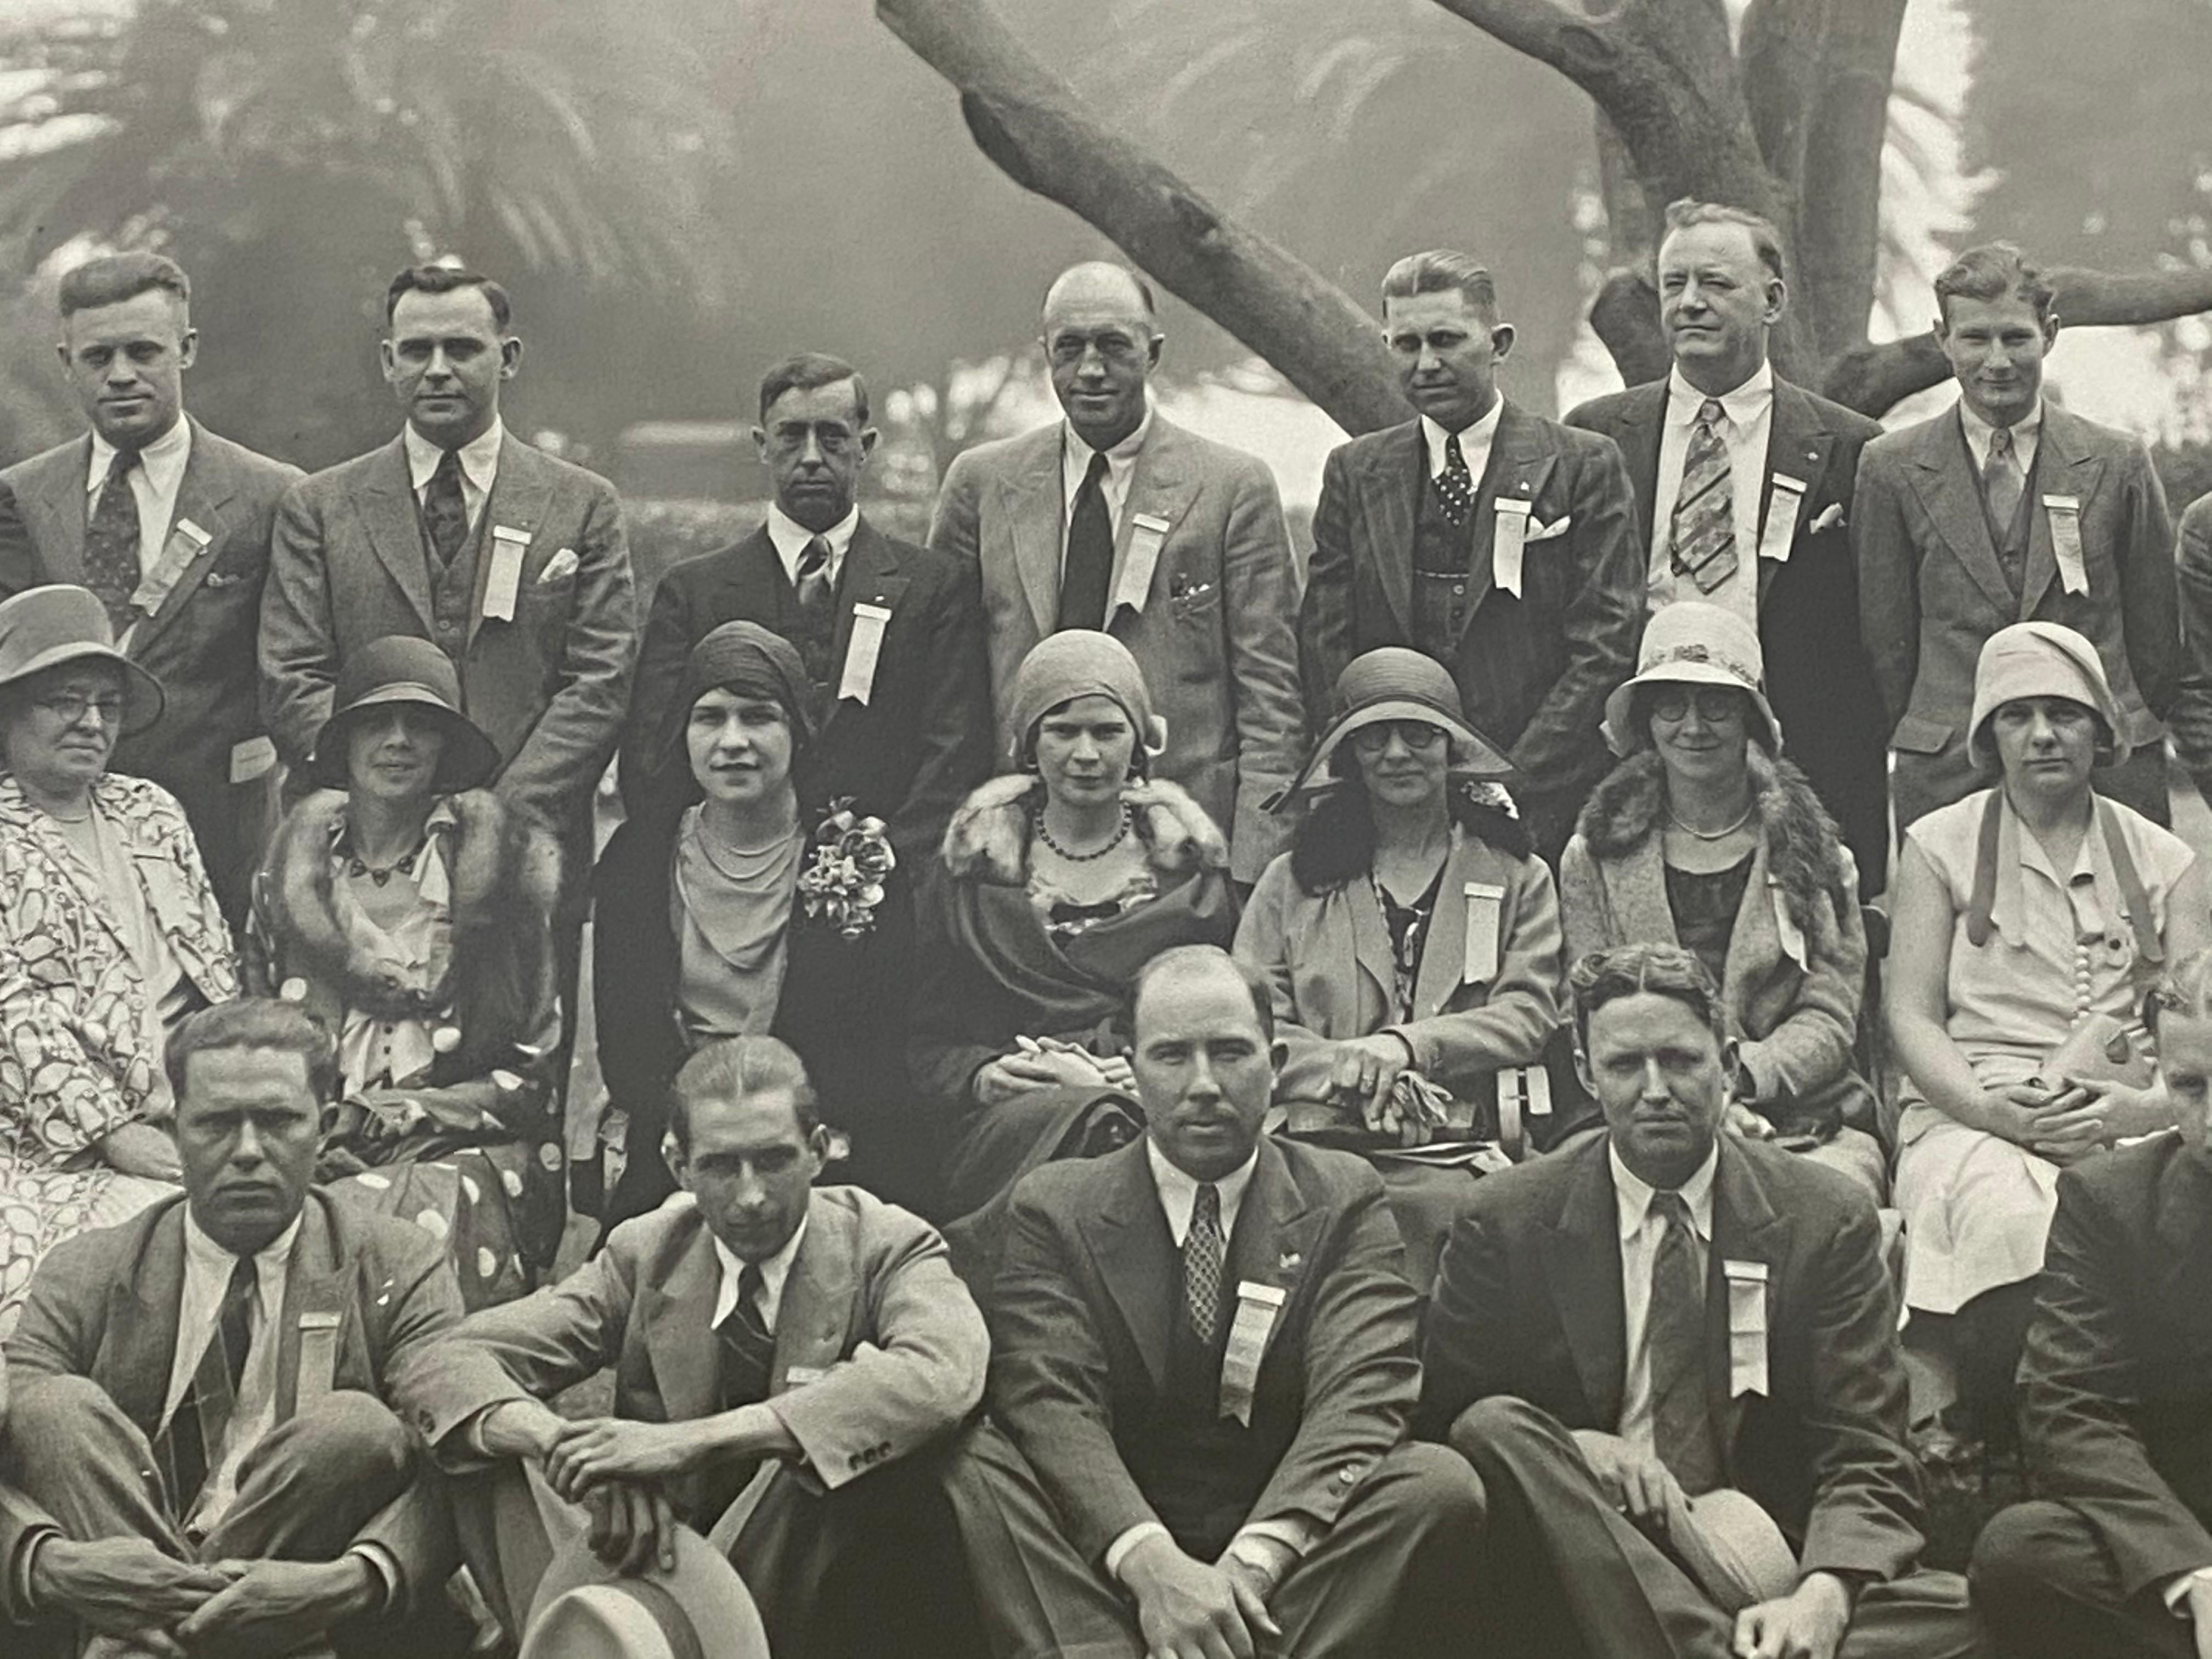 Vintage CA State Division International Association for ID Photograph um 1930 im Angebot 1